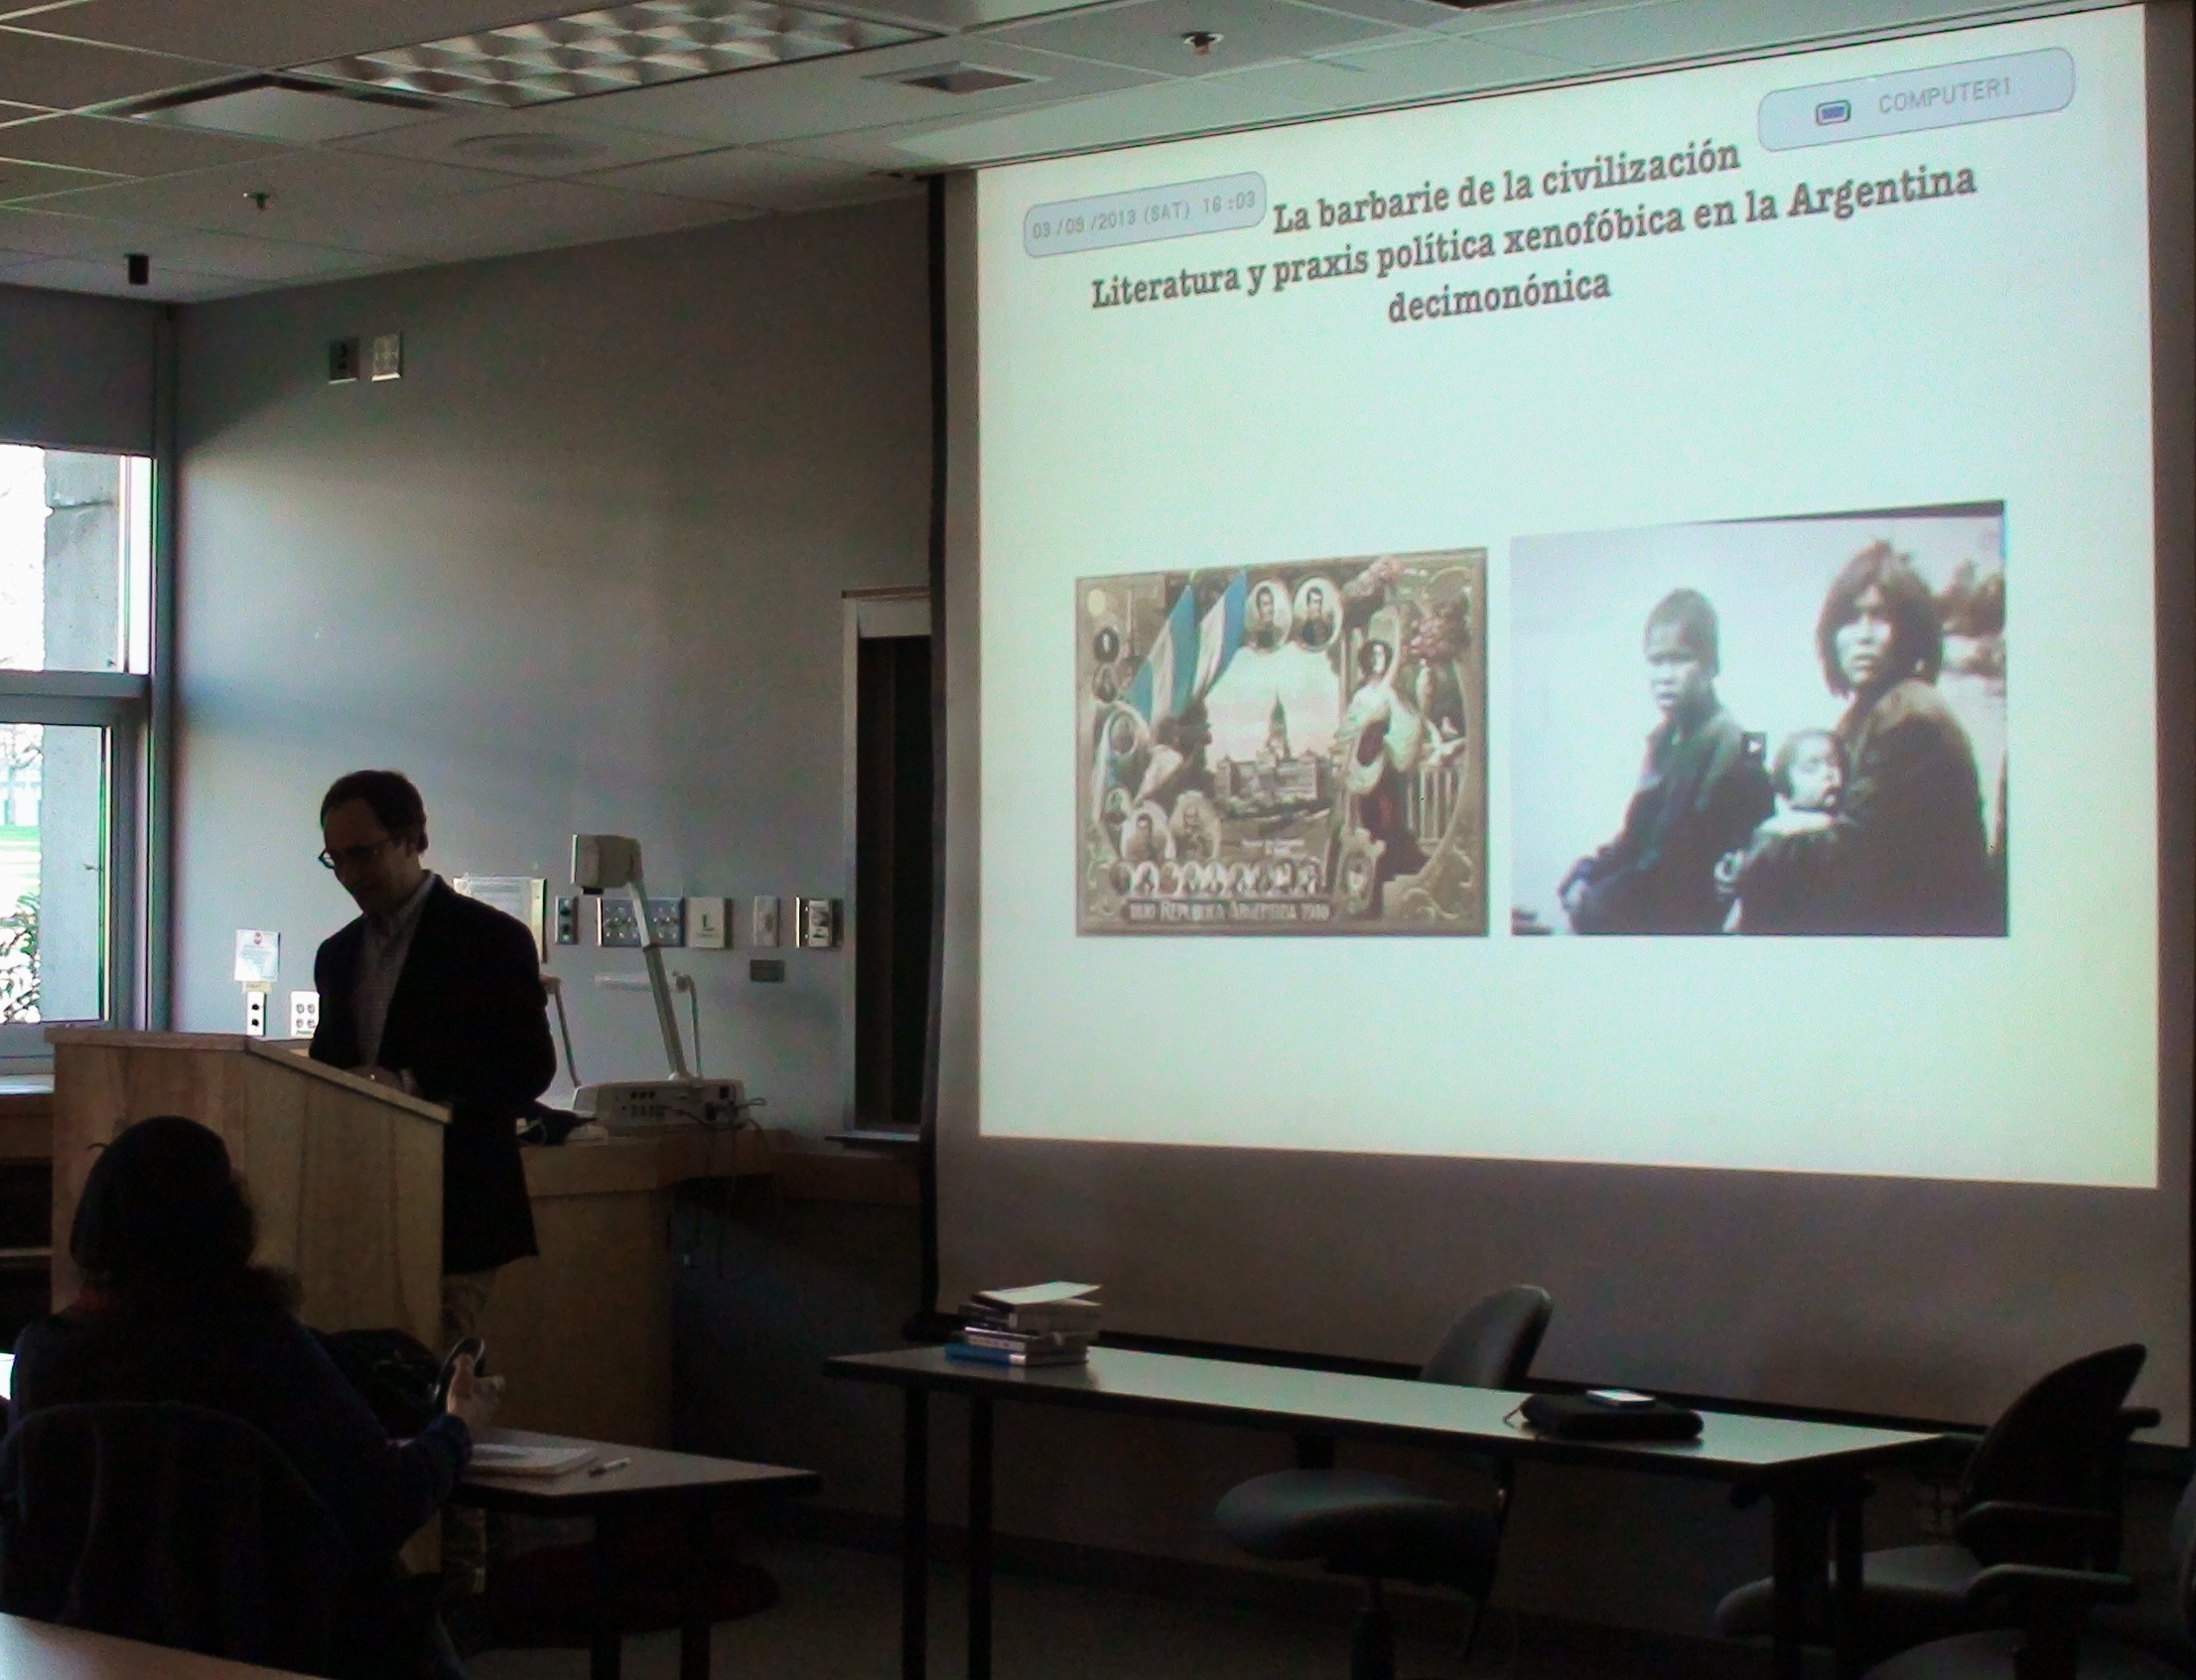 Carlos Gustavo Halaburda's talk on 19th century Argentinian literature.